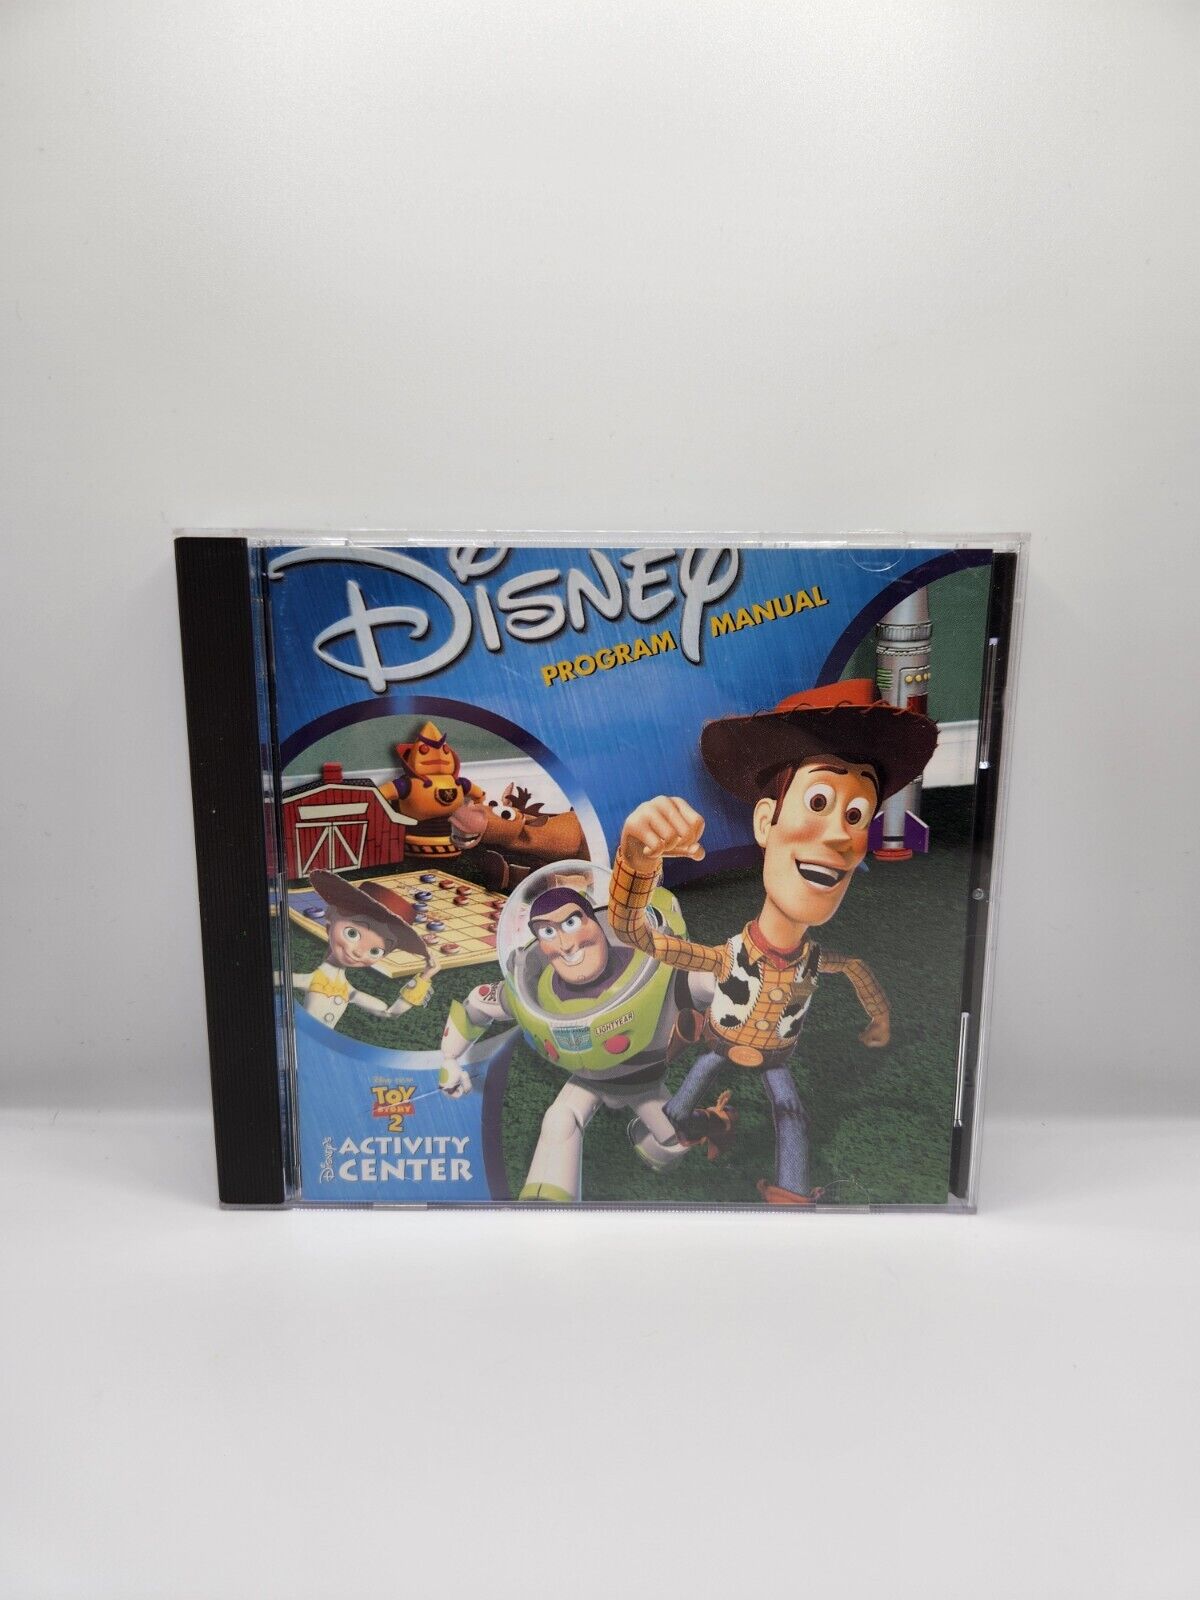 Disney Toy Story 2 Activity Center Program Manual CD ROM B1